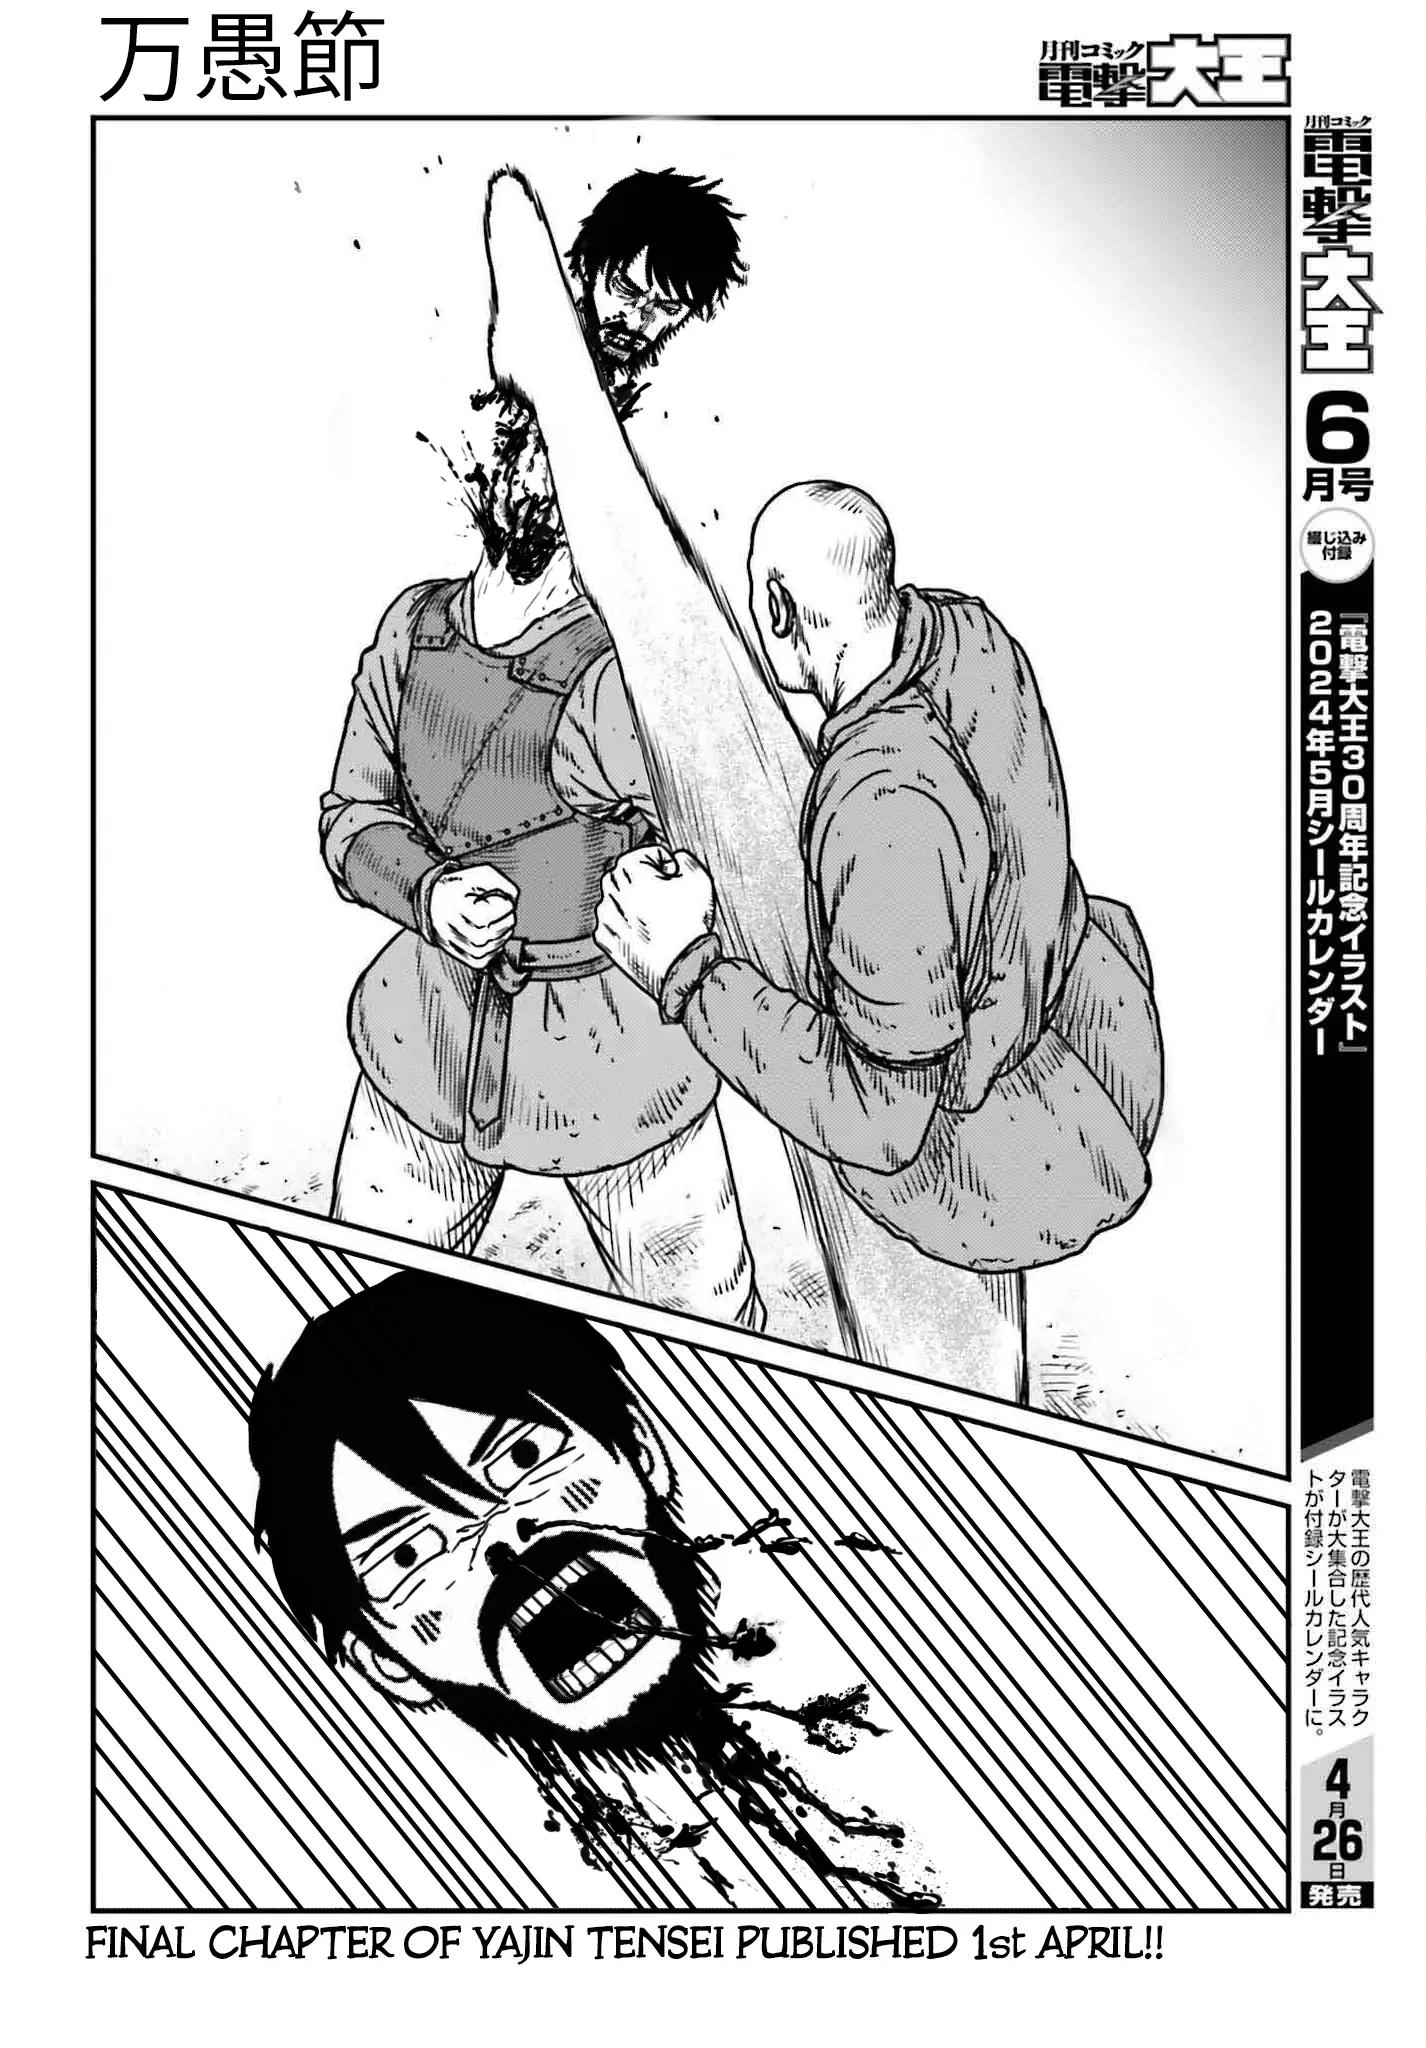 Yajin Tensei: Karate Survivor In Another World - 49 page 1-1a9afe01